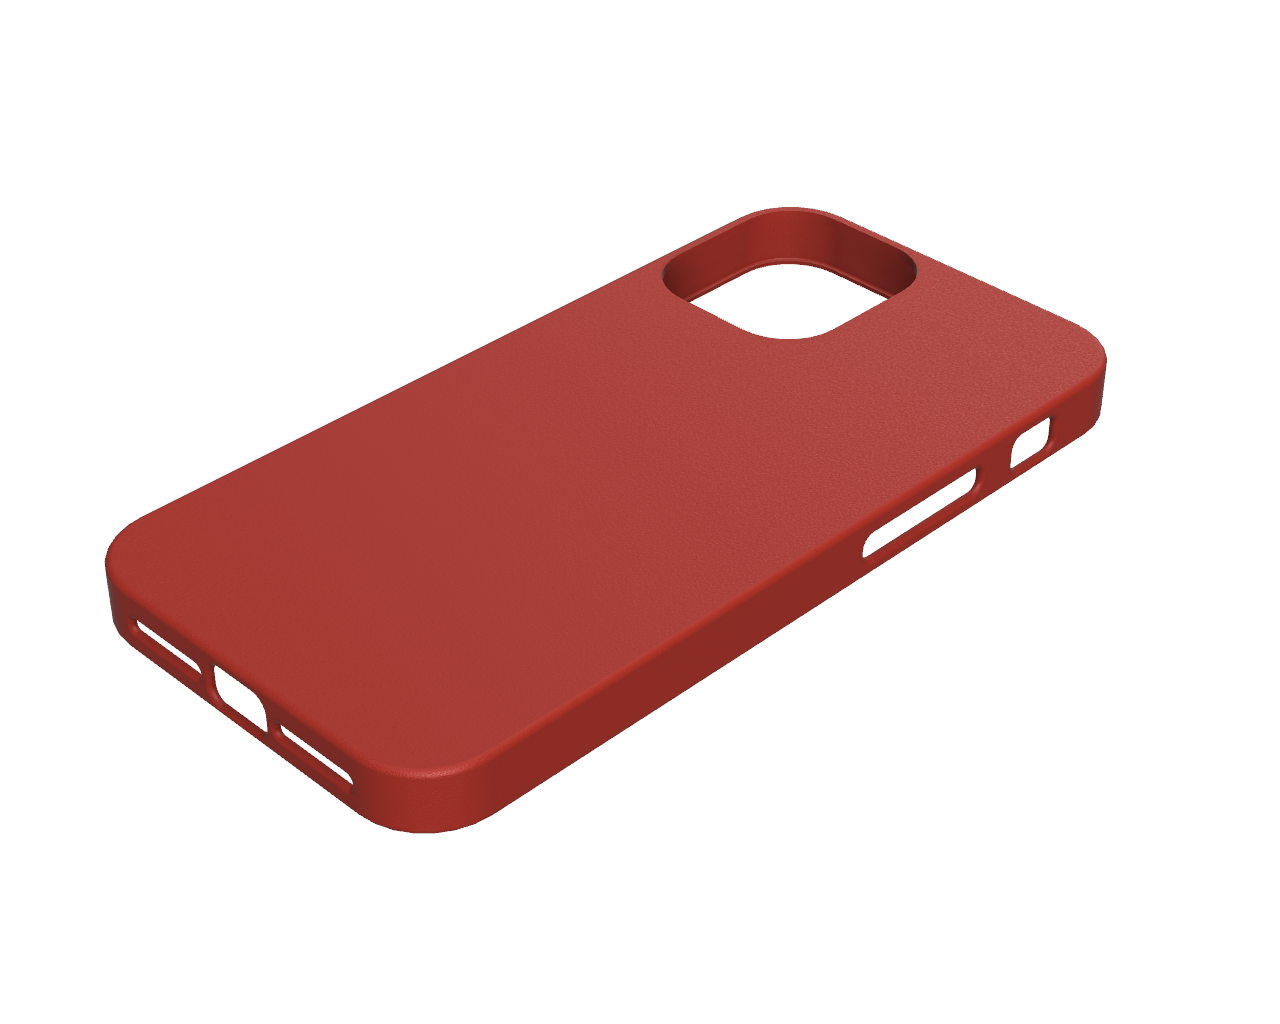 3D Printed Apple iPhone 12 Mini Case by kamilkupski